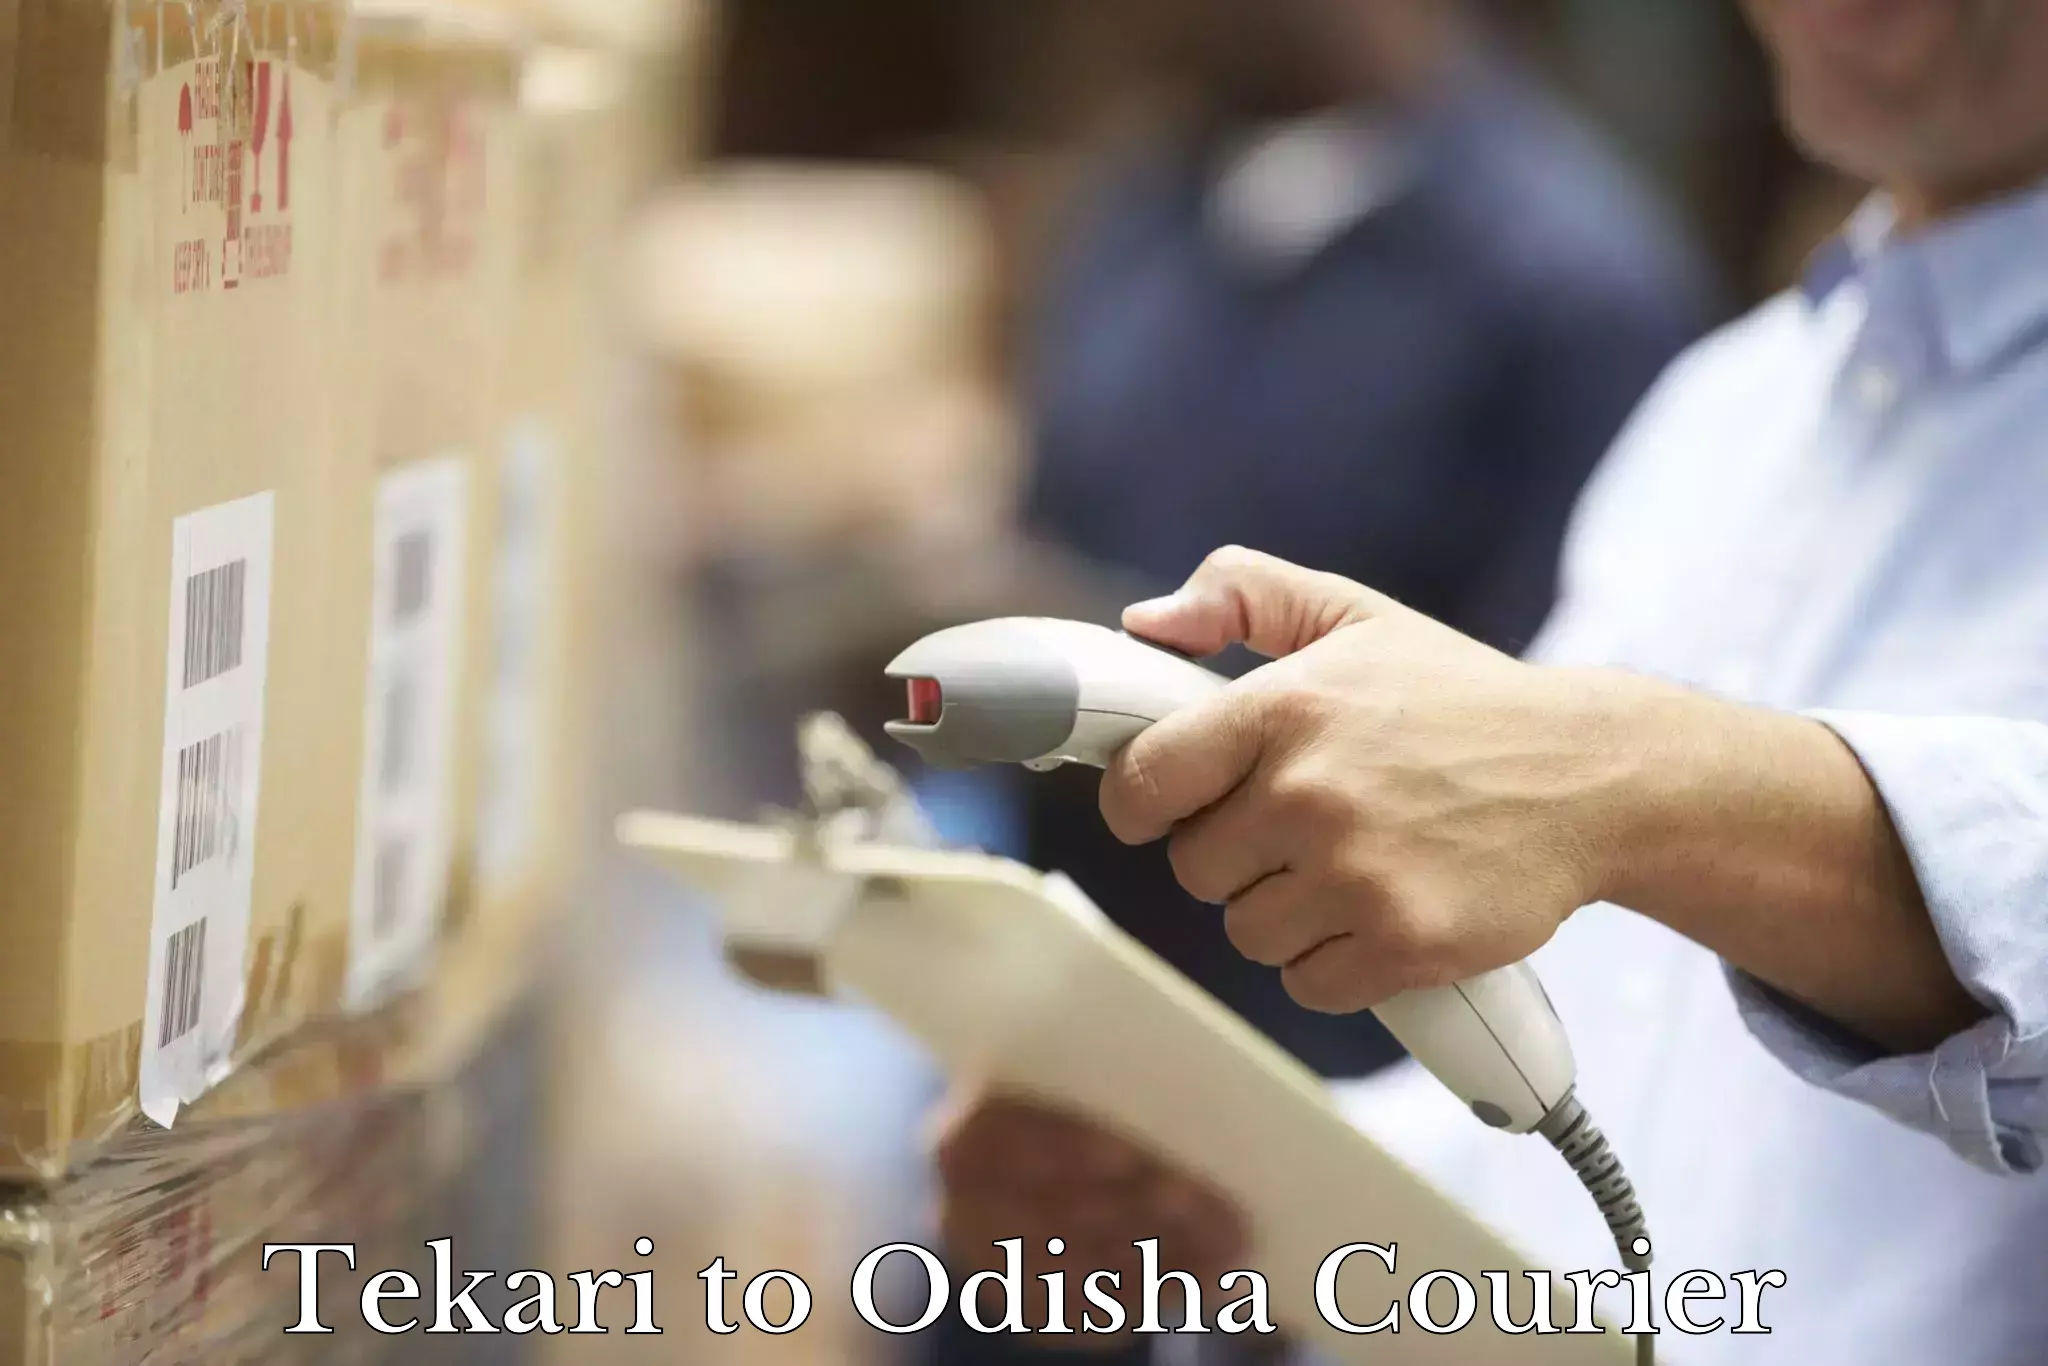 Courier service partnerships Tekari to Basta